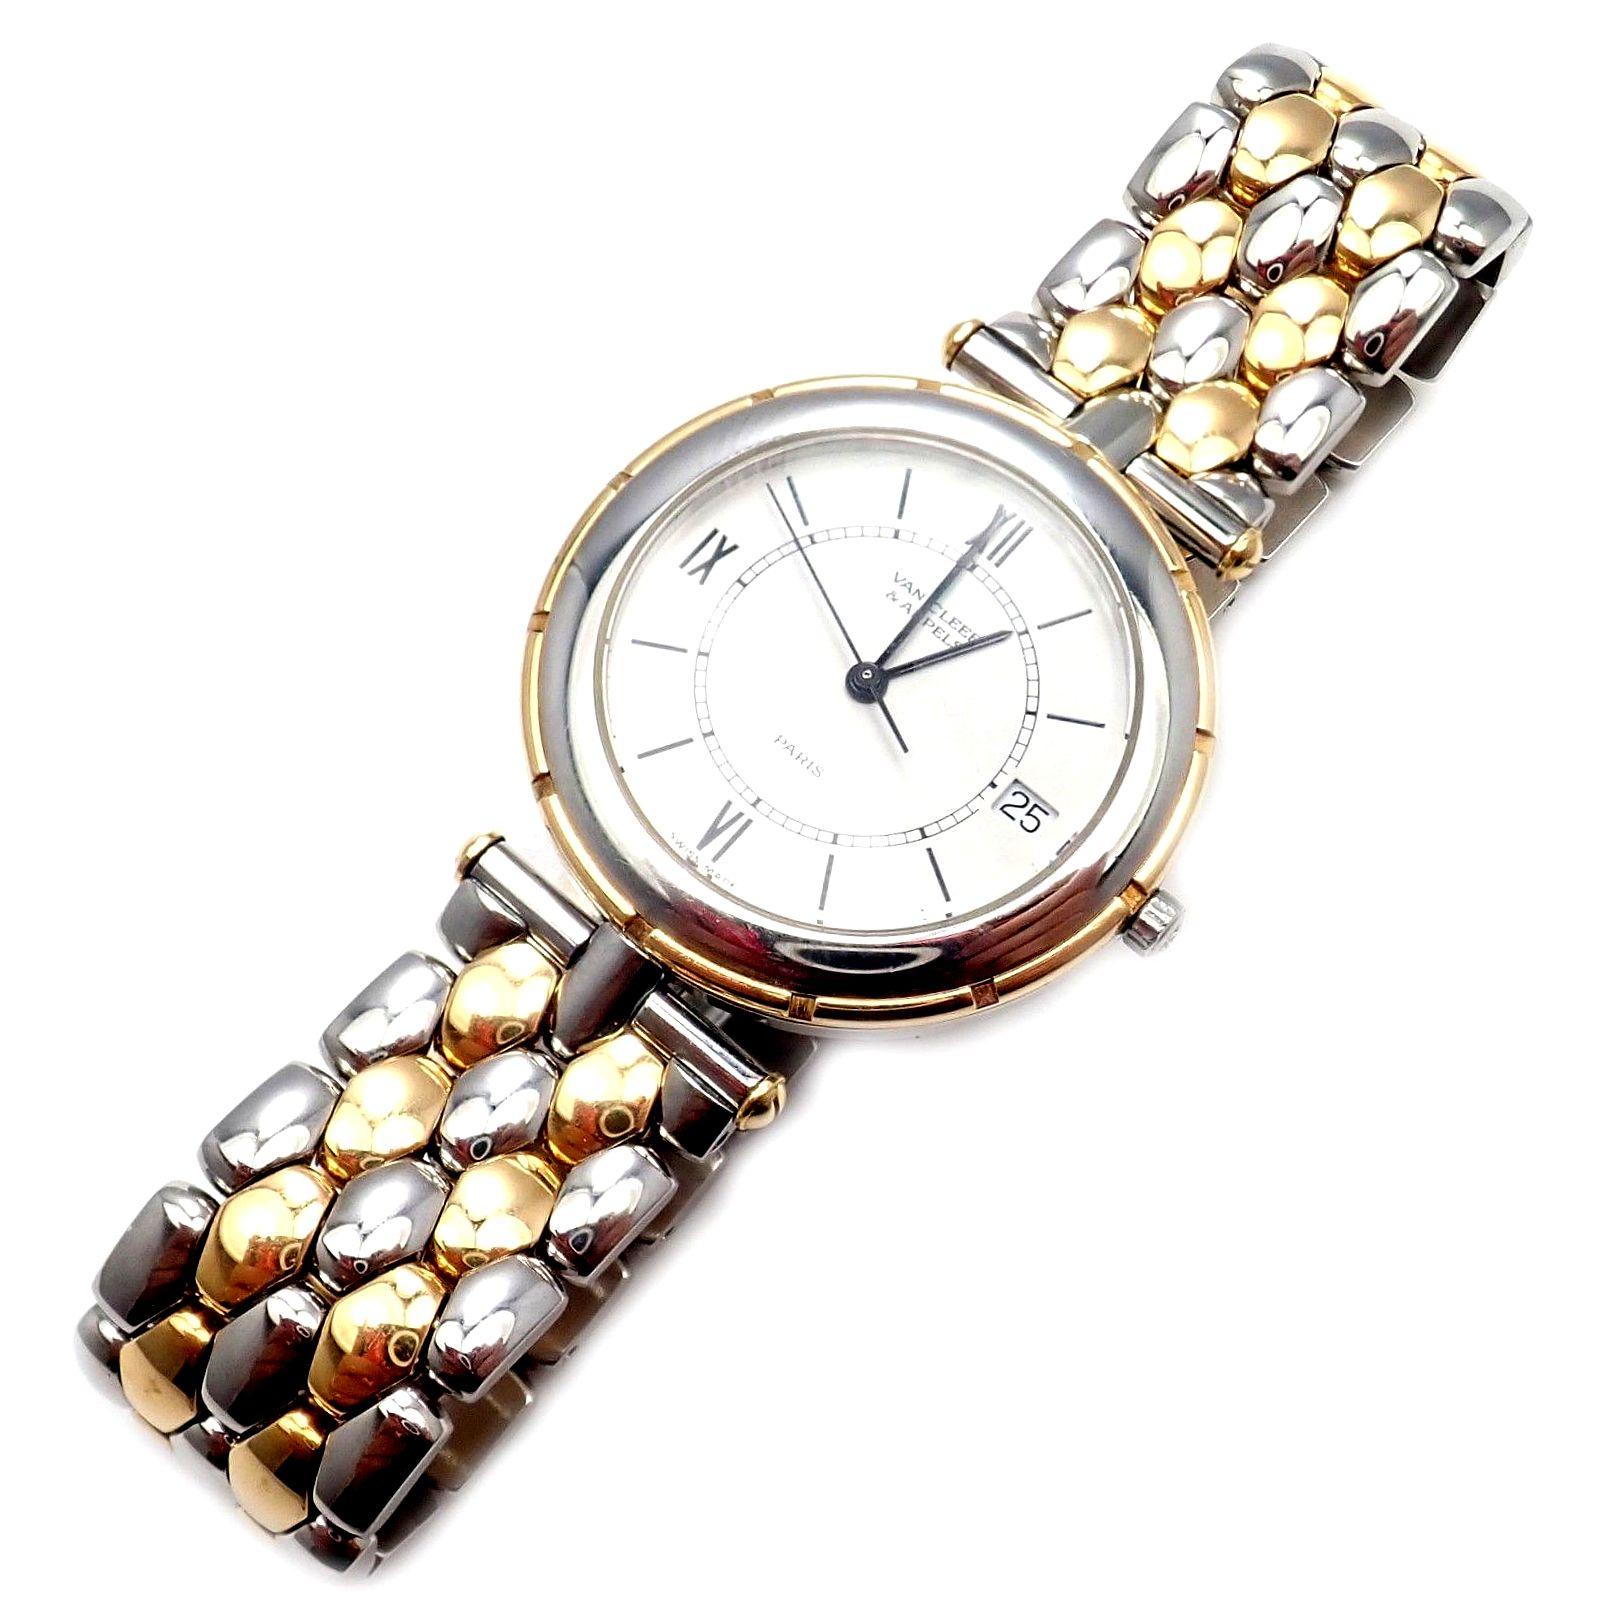 Van Cleef & Arpels Classique Quartz Gold and Stainless Steel Watch 3